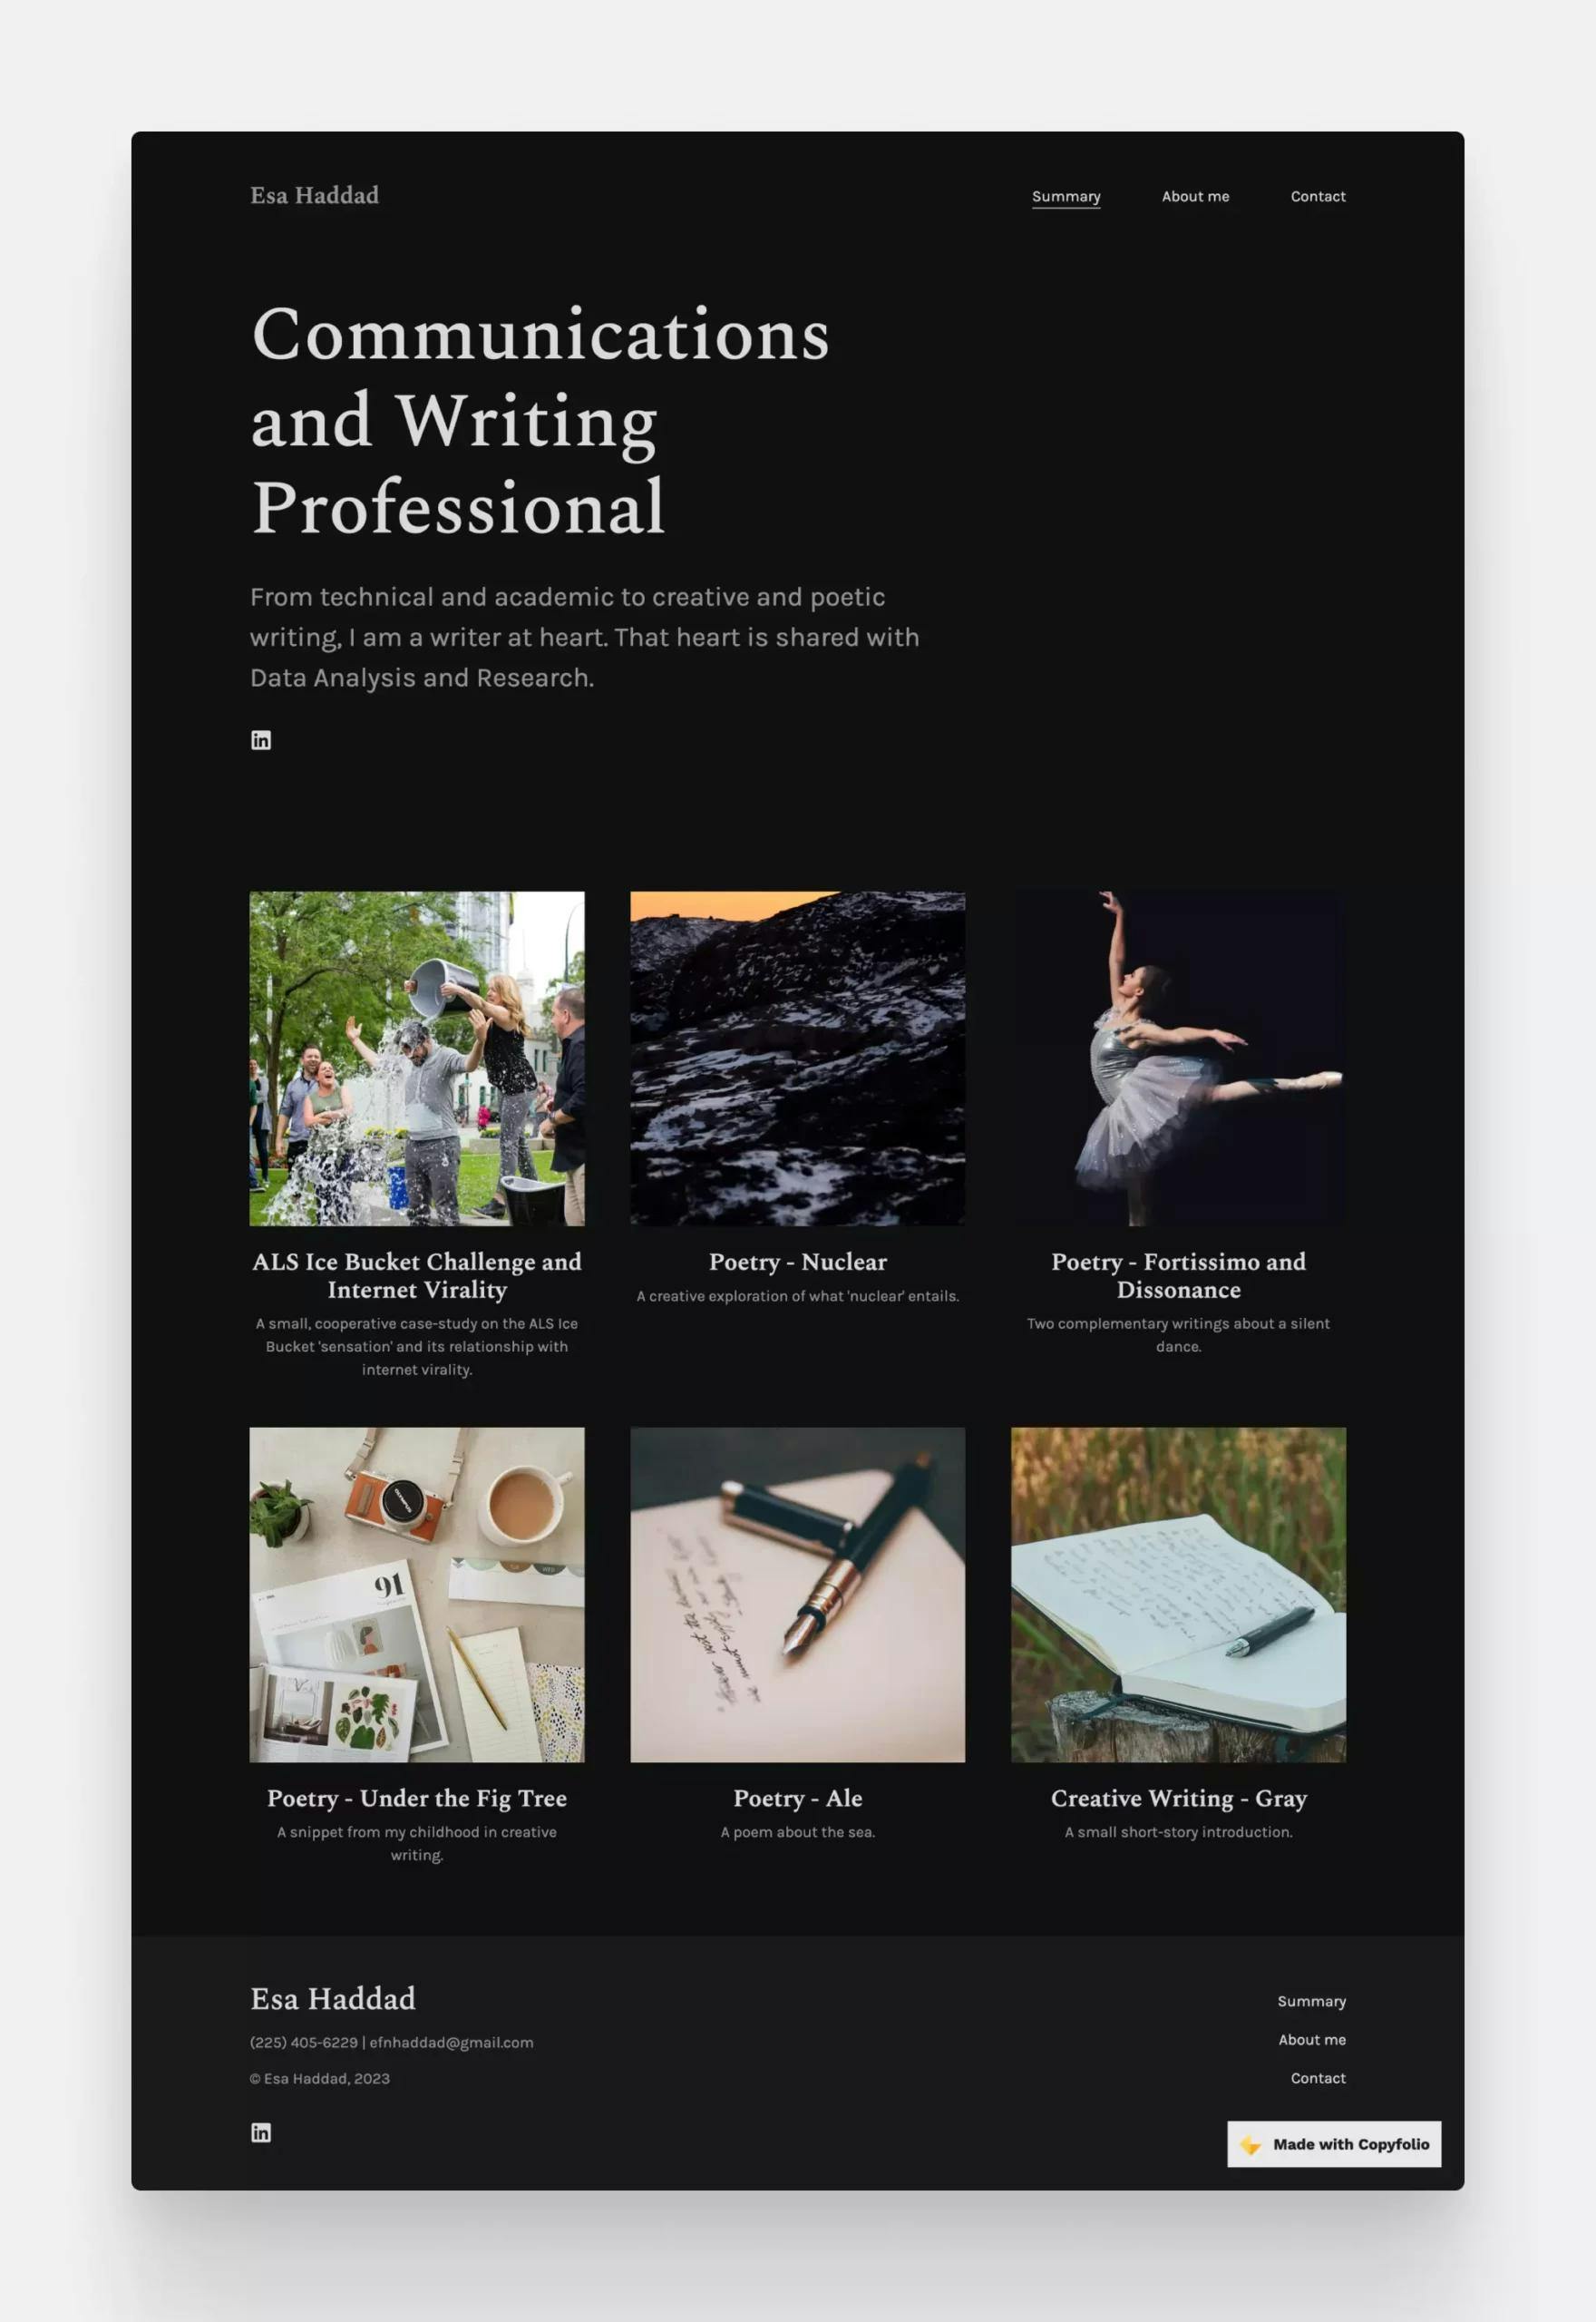 The creative writing portfolio of communications and writing professional Esa Haddad